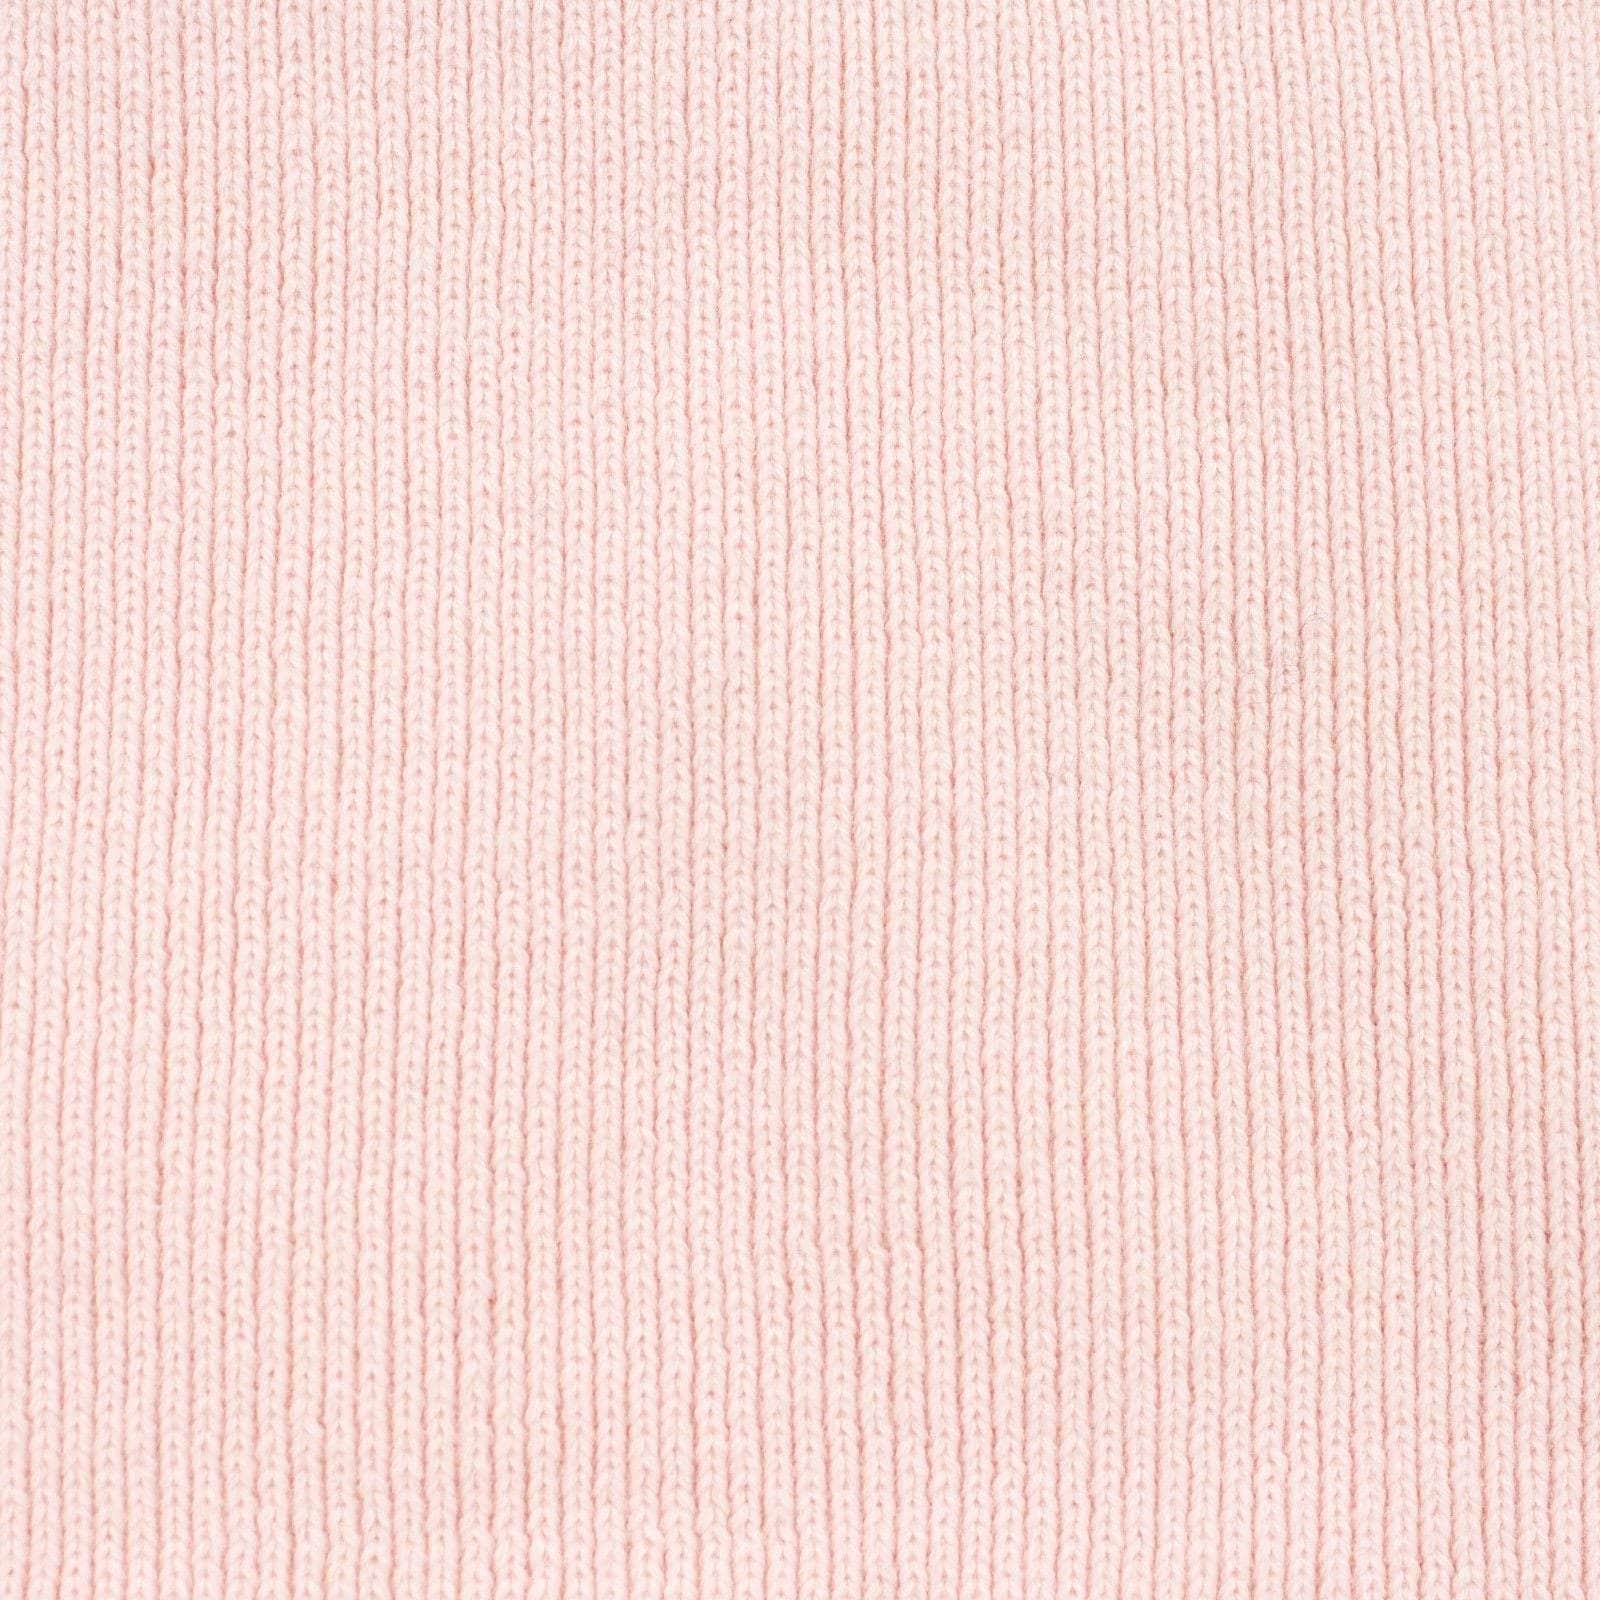 Baja East Dresses S Cut Out Asymmetrical Sweater Dress - Pink 58LE-1612/NE 58LE-1612/NE